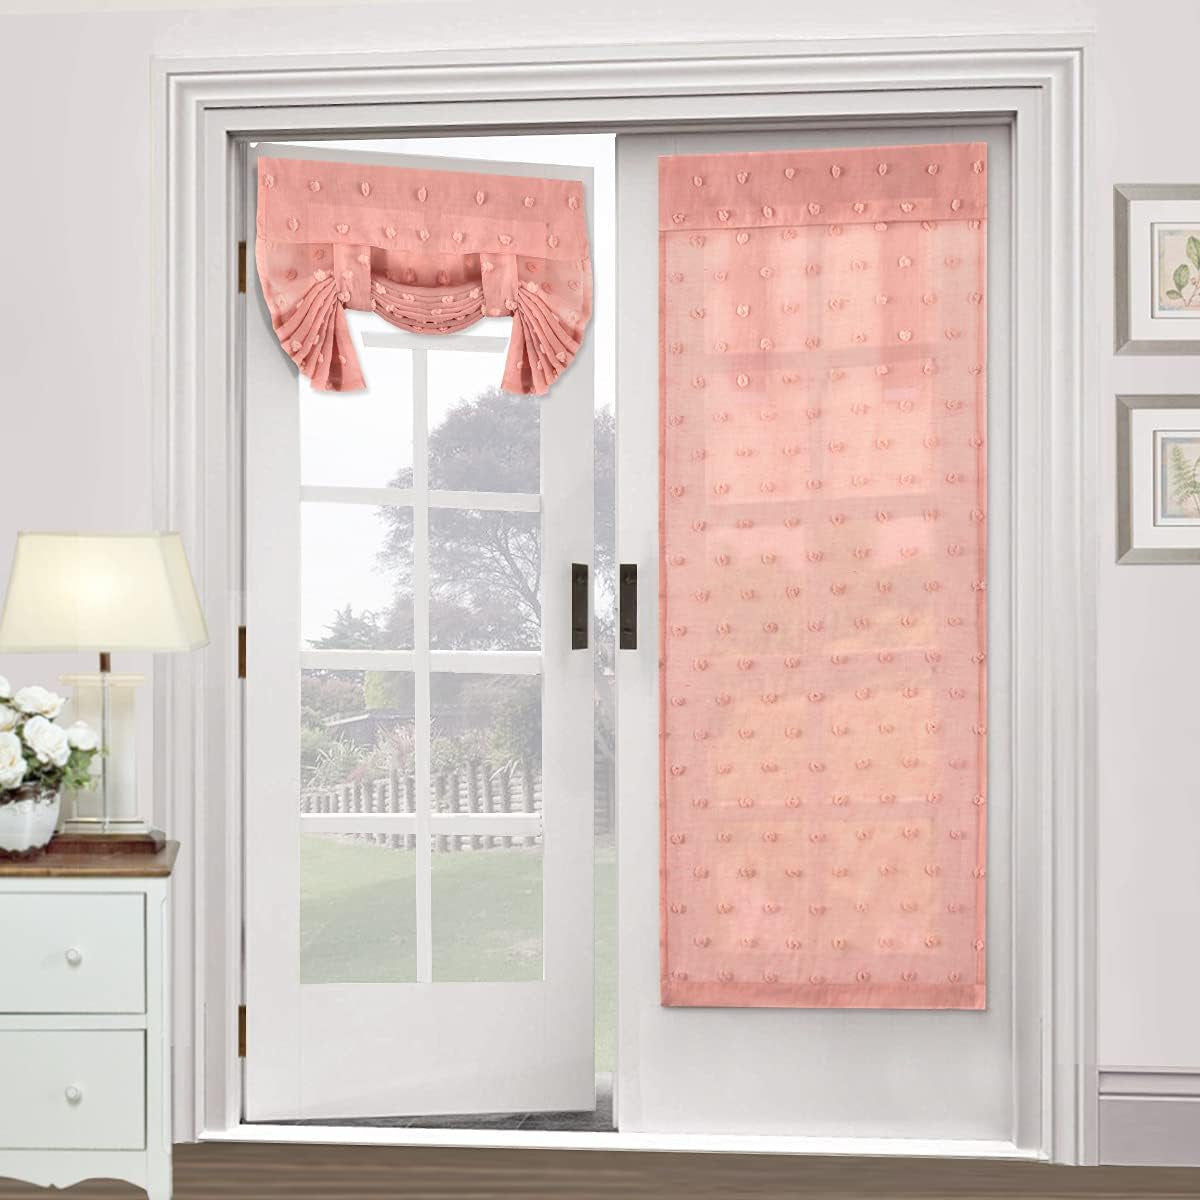 H.VERSAILTEX Natural Linen Blended Door Curtain - Semi Sheer French Door Curtain Light Filtering Tricia Window Door Curtain for Patio Door Tie up Shade, 26 X 68 Inches, 1 Panel, Angora  H.VERSAILTEX Pompom - Coral Pink 2 